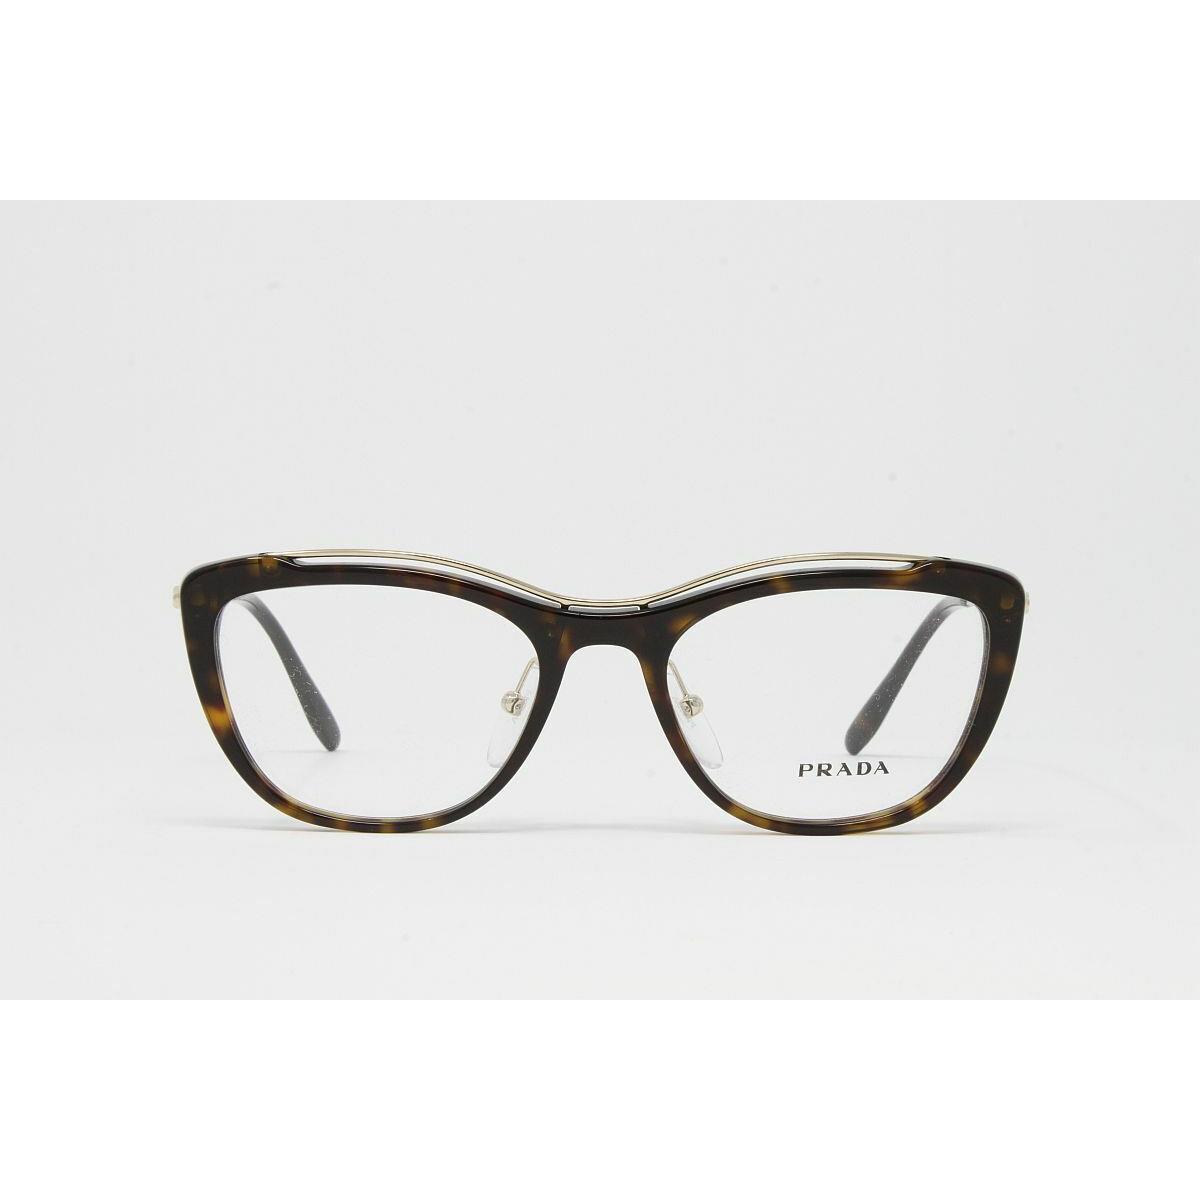 Prada eyeglasses  - Havana Frame 0